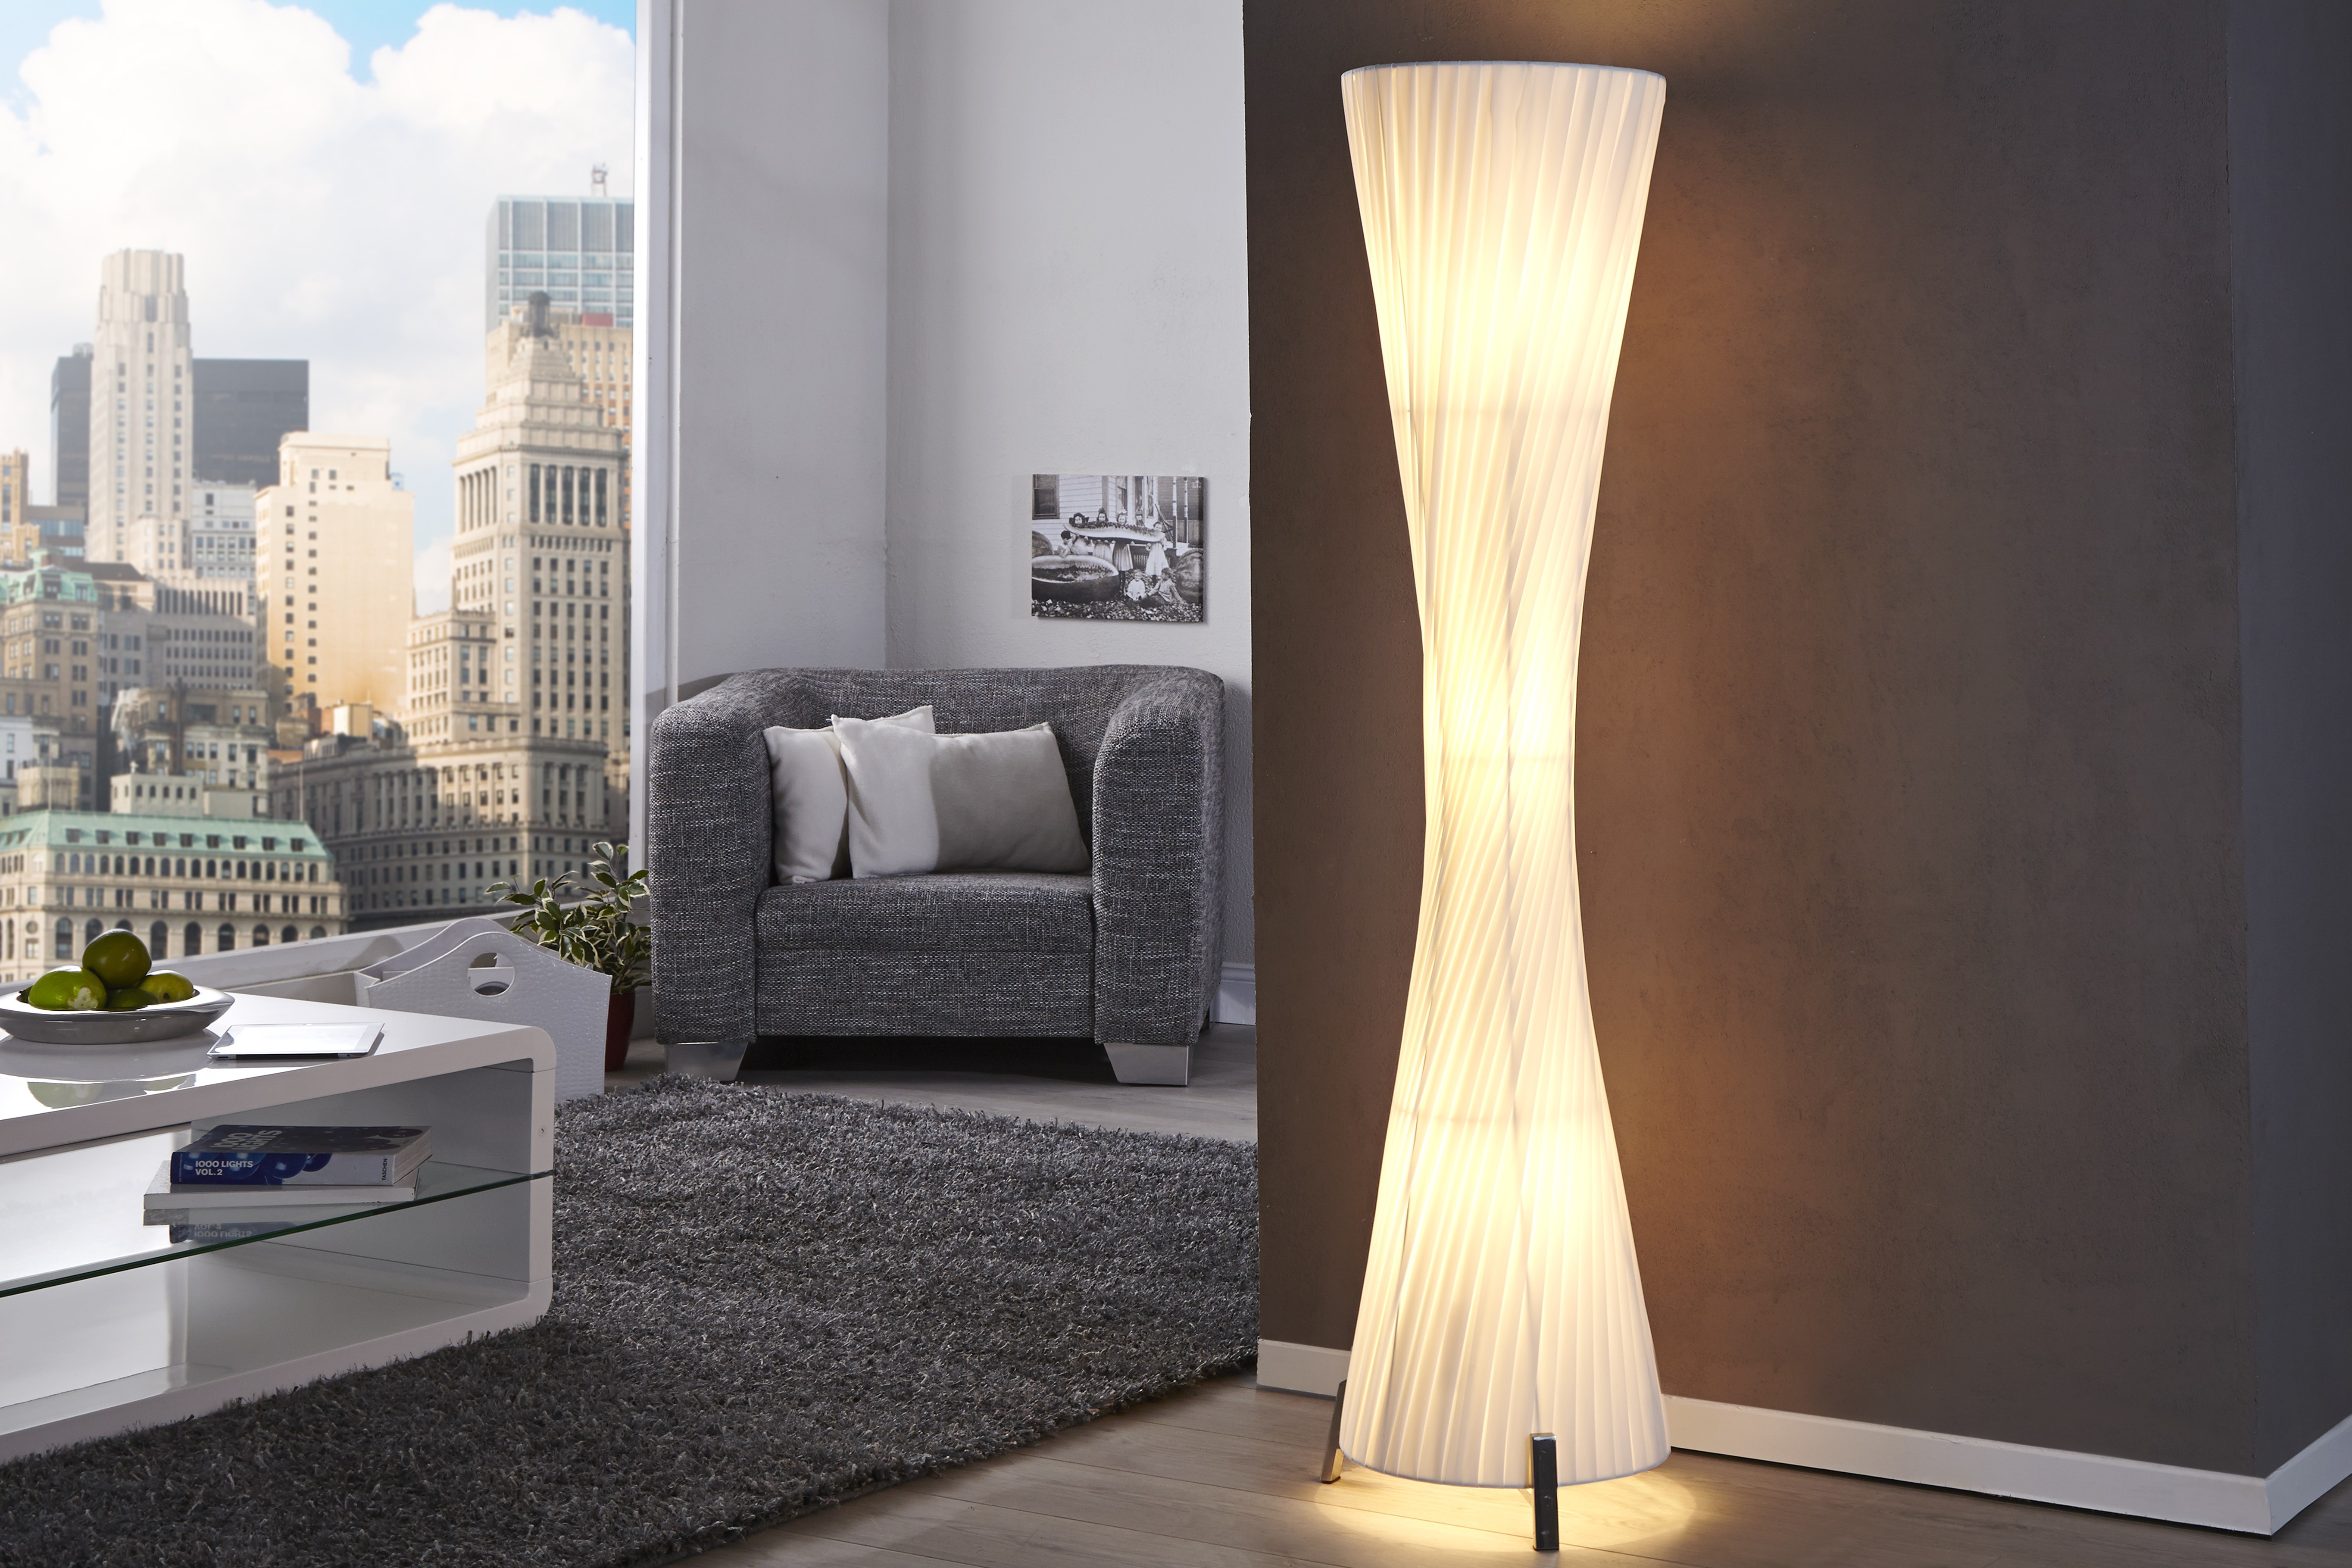 Estila Luxusná moderná stojaca lampa Helix L 160cm biela